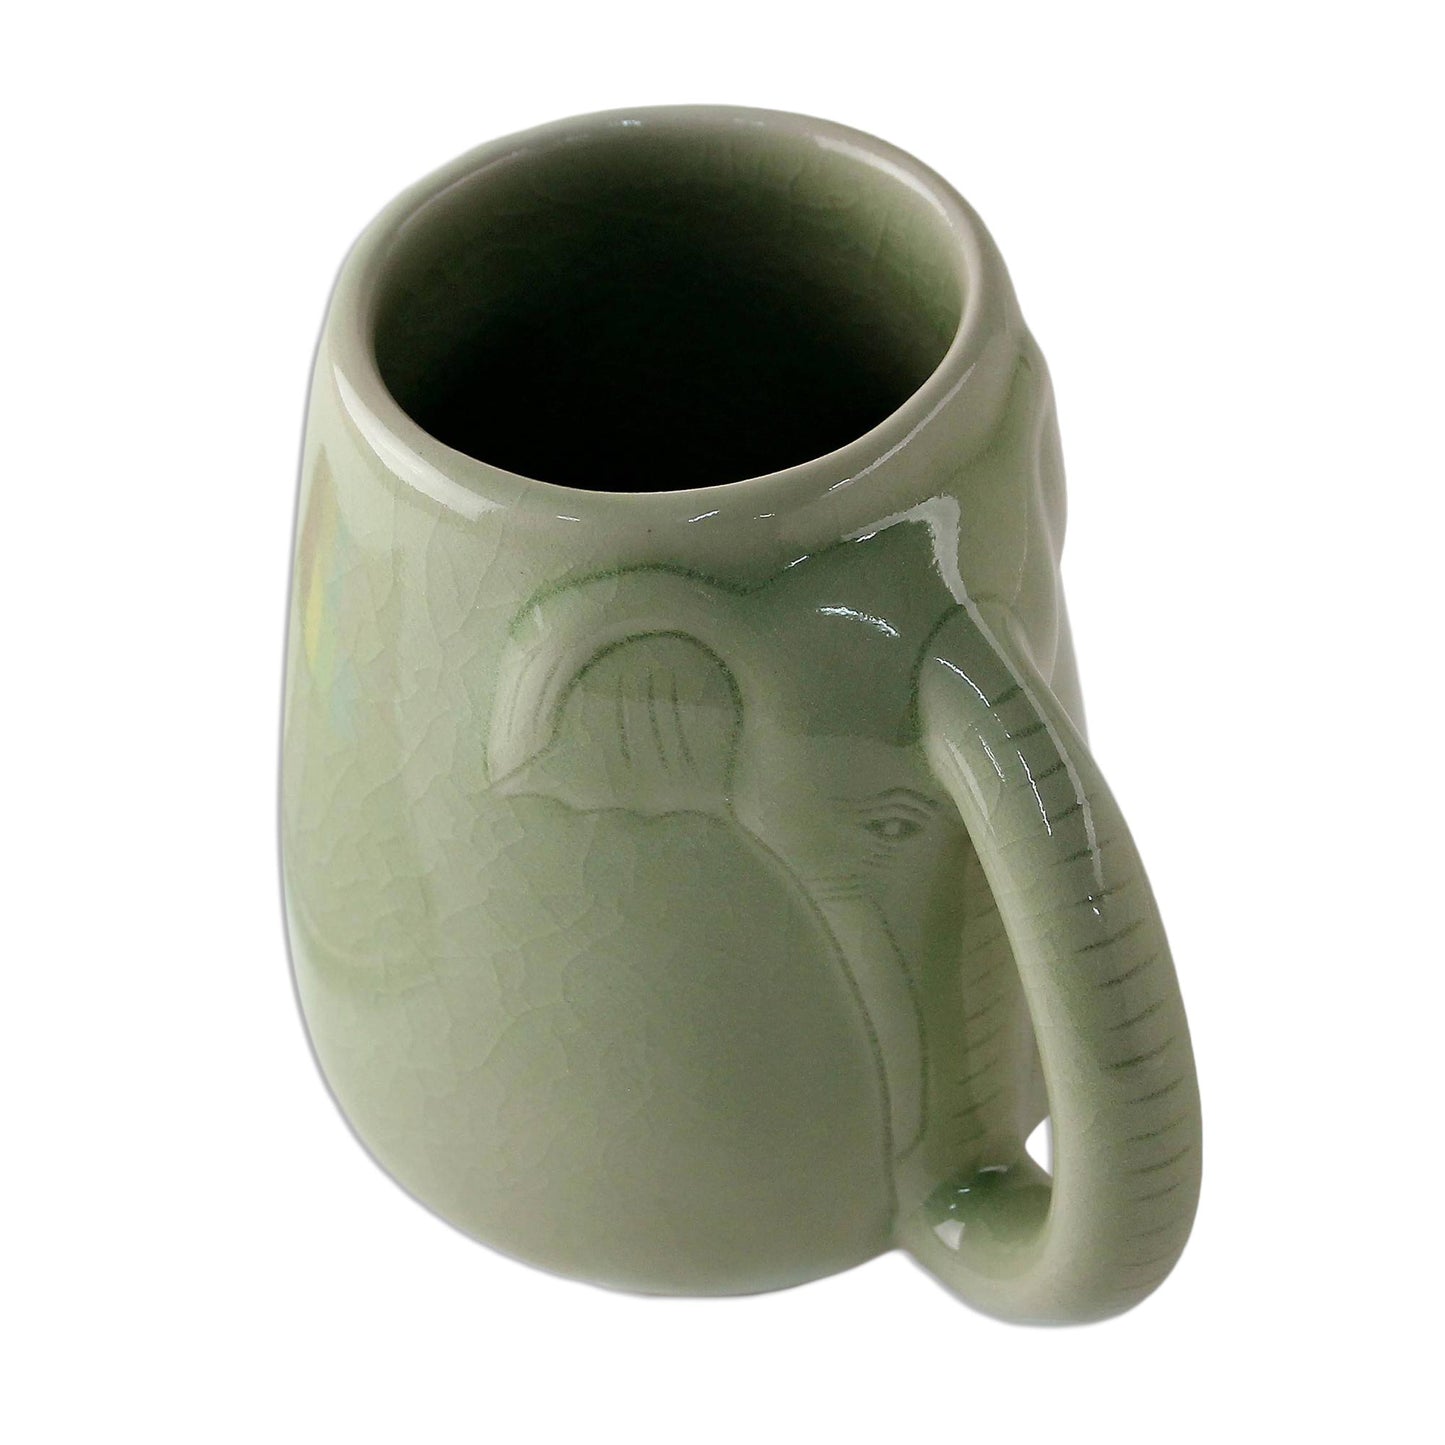 Morning Elephant in Green Ceramic Celadon Elephant Mug in Green from Thailand